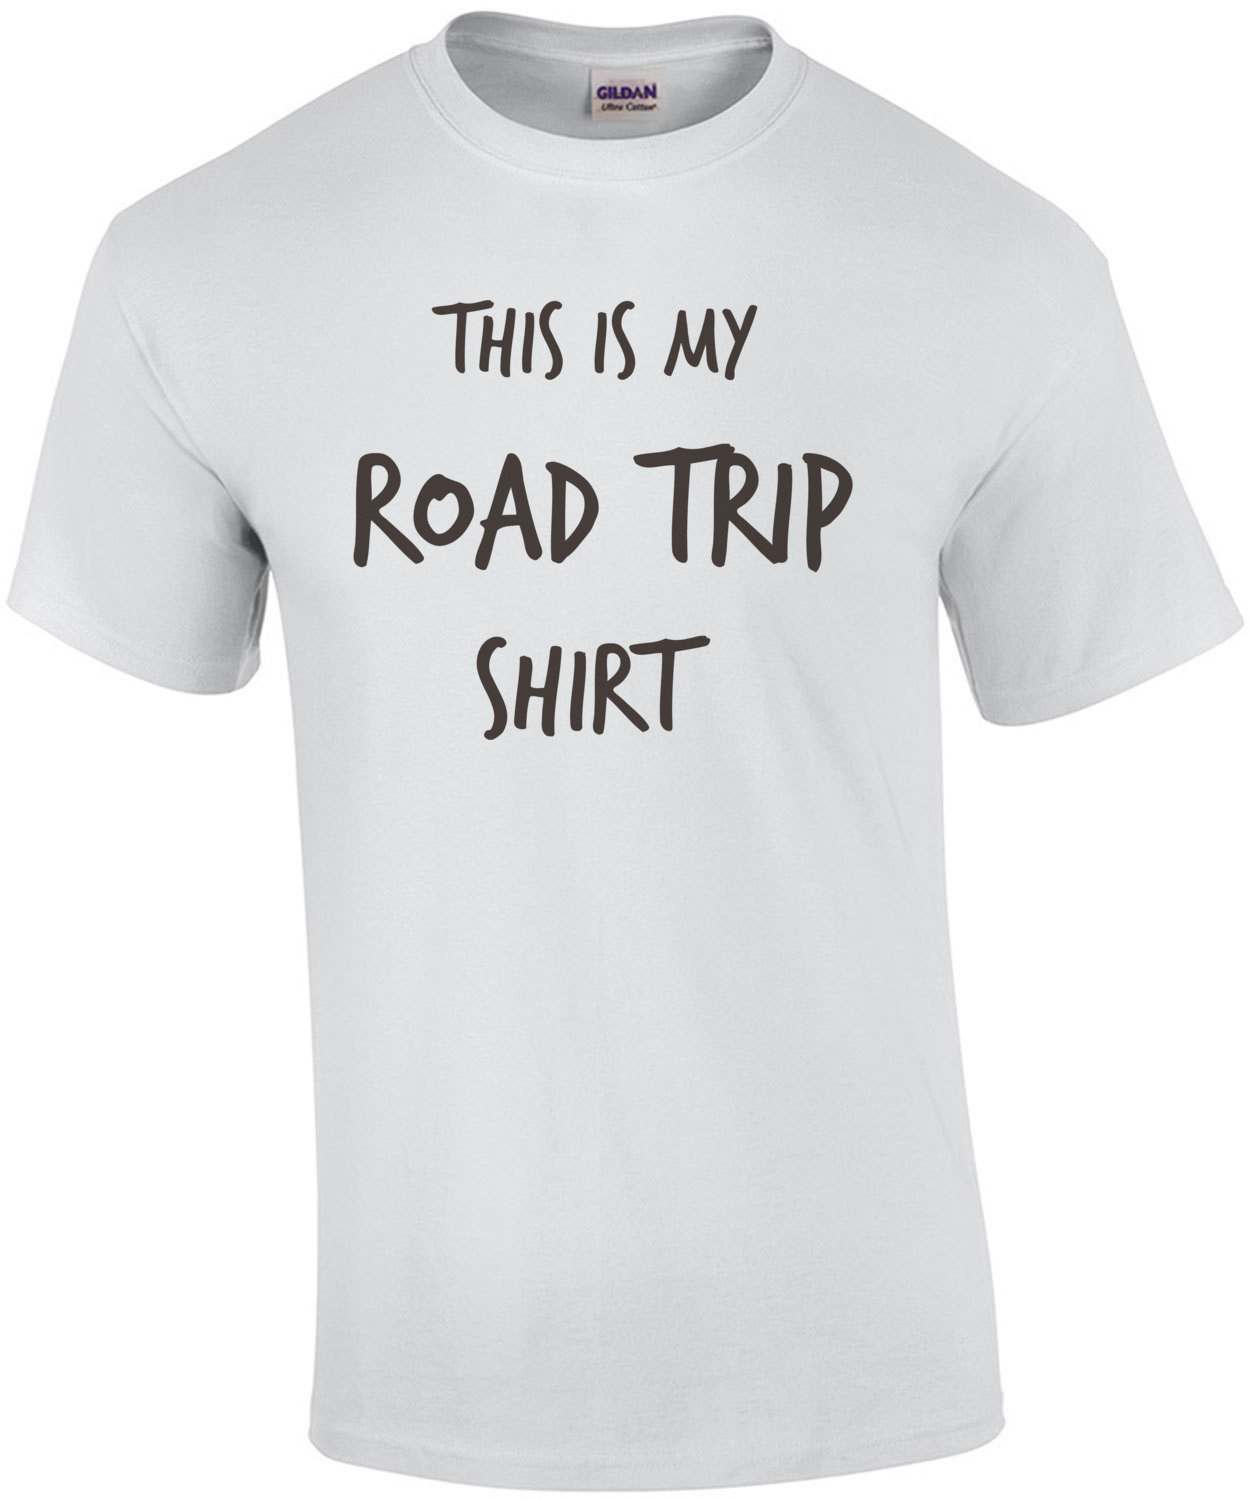 This is my road trip shirt - Road Trip T-Shirt